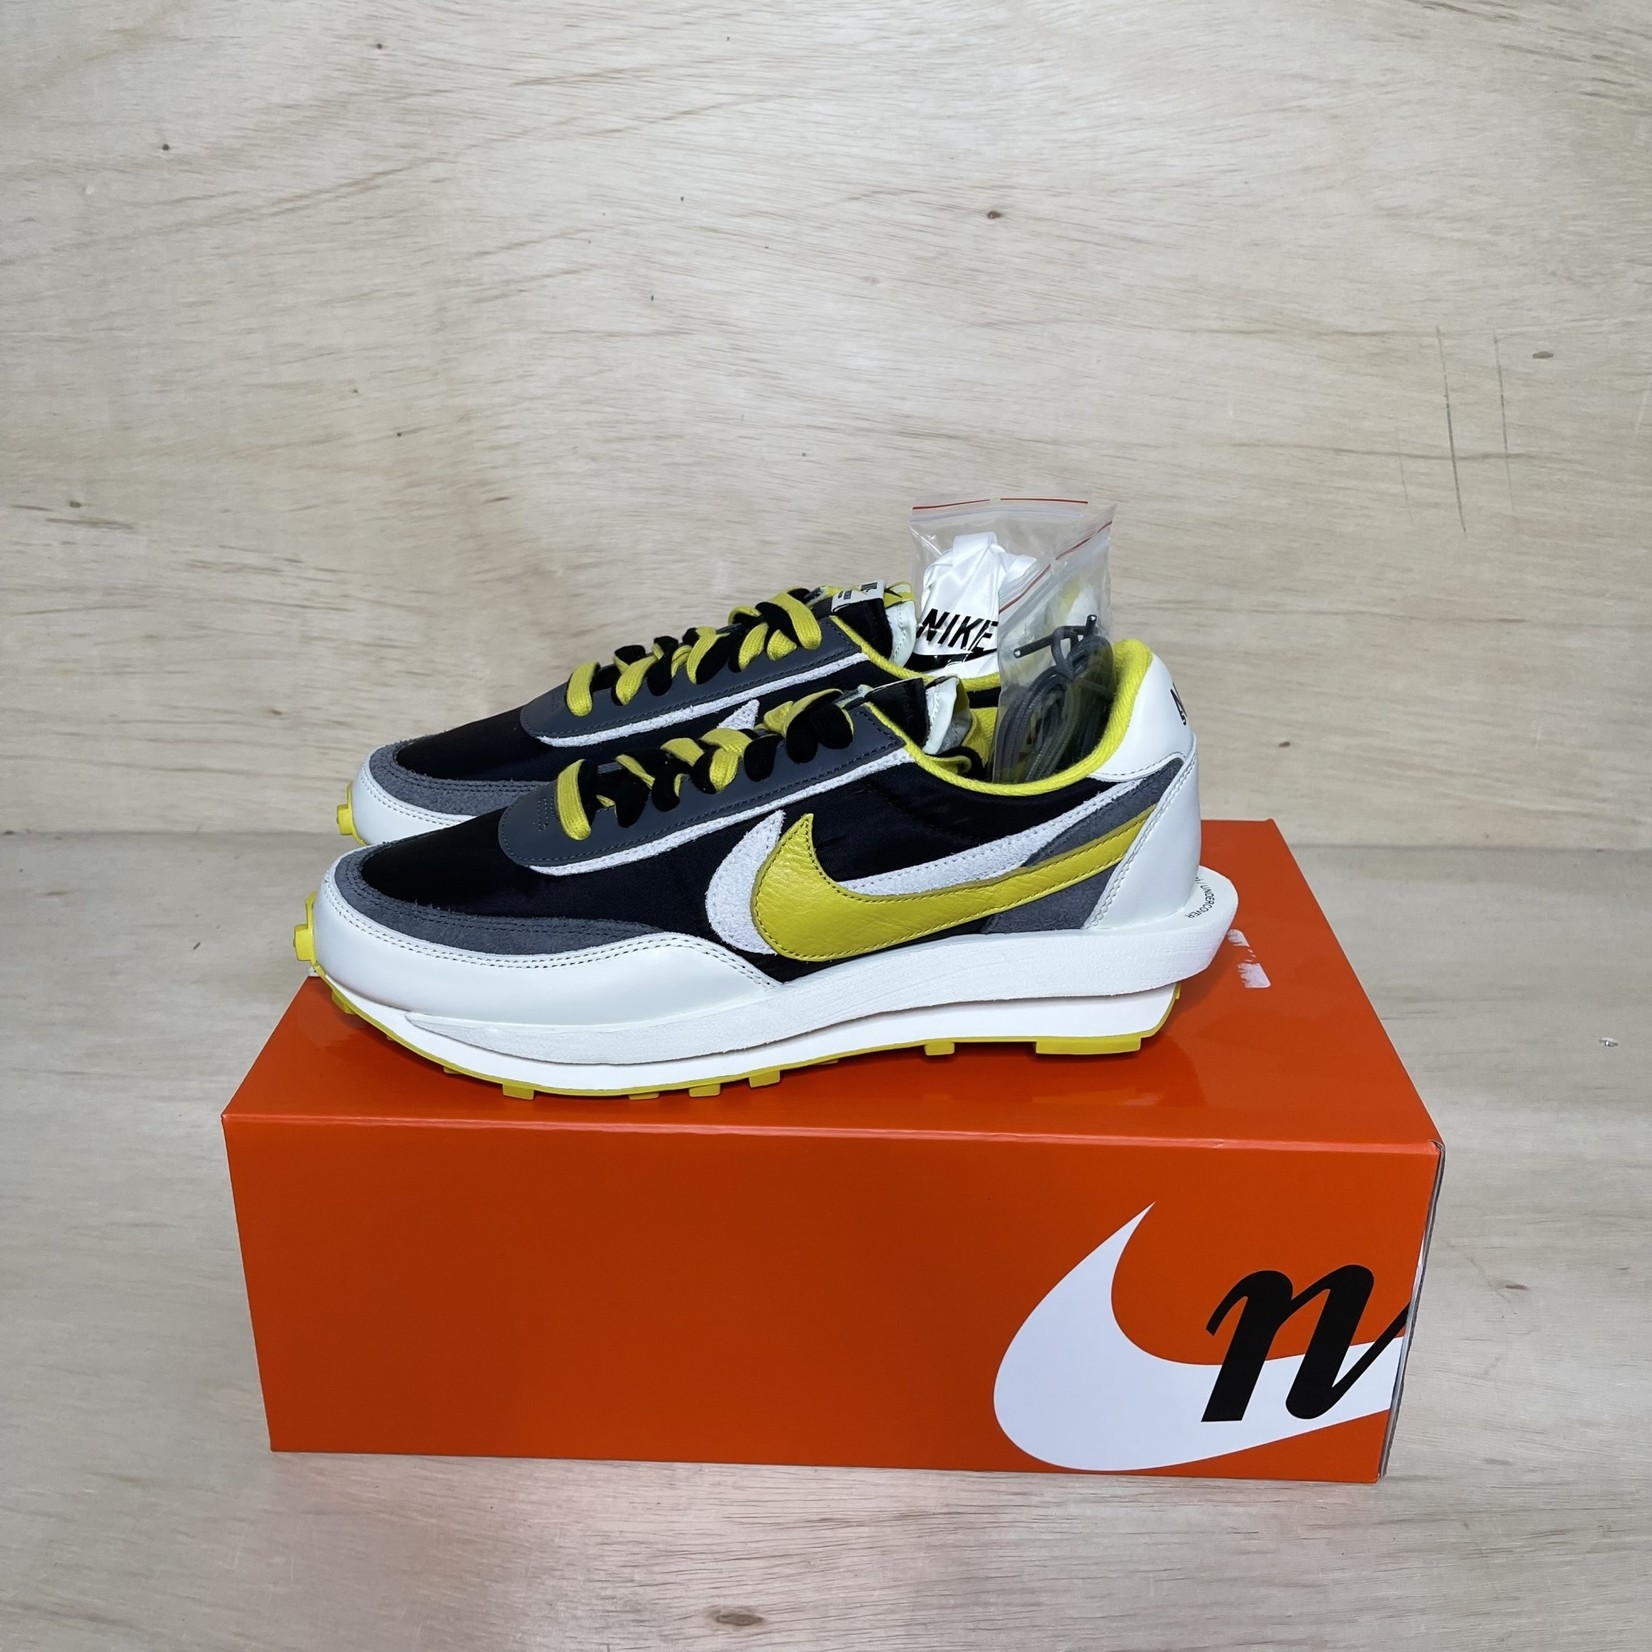 Nike custom sacai waffle Nike Sacai x Undercover Bright Citron Size 11, DS BRAND NEW